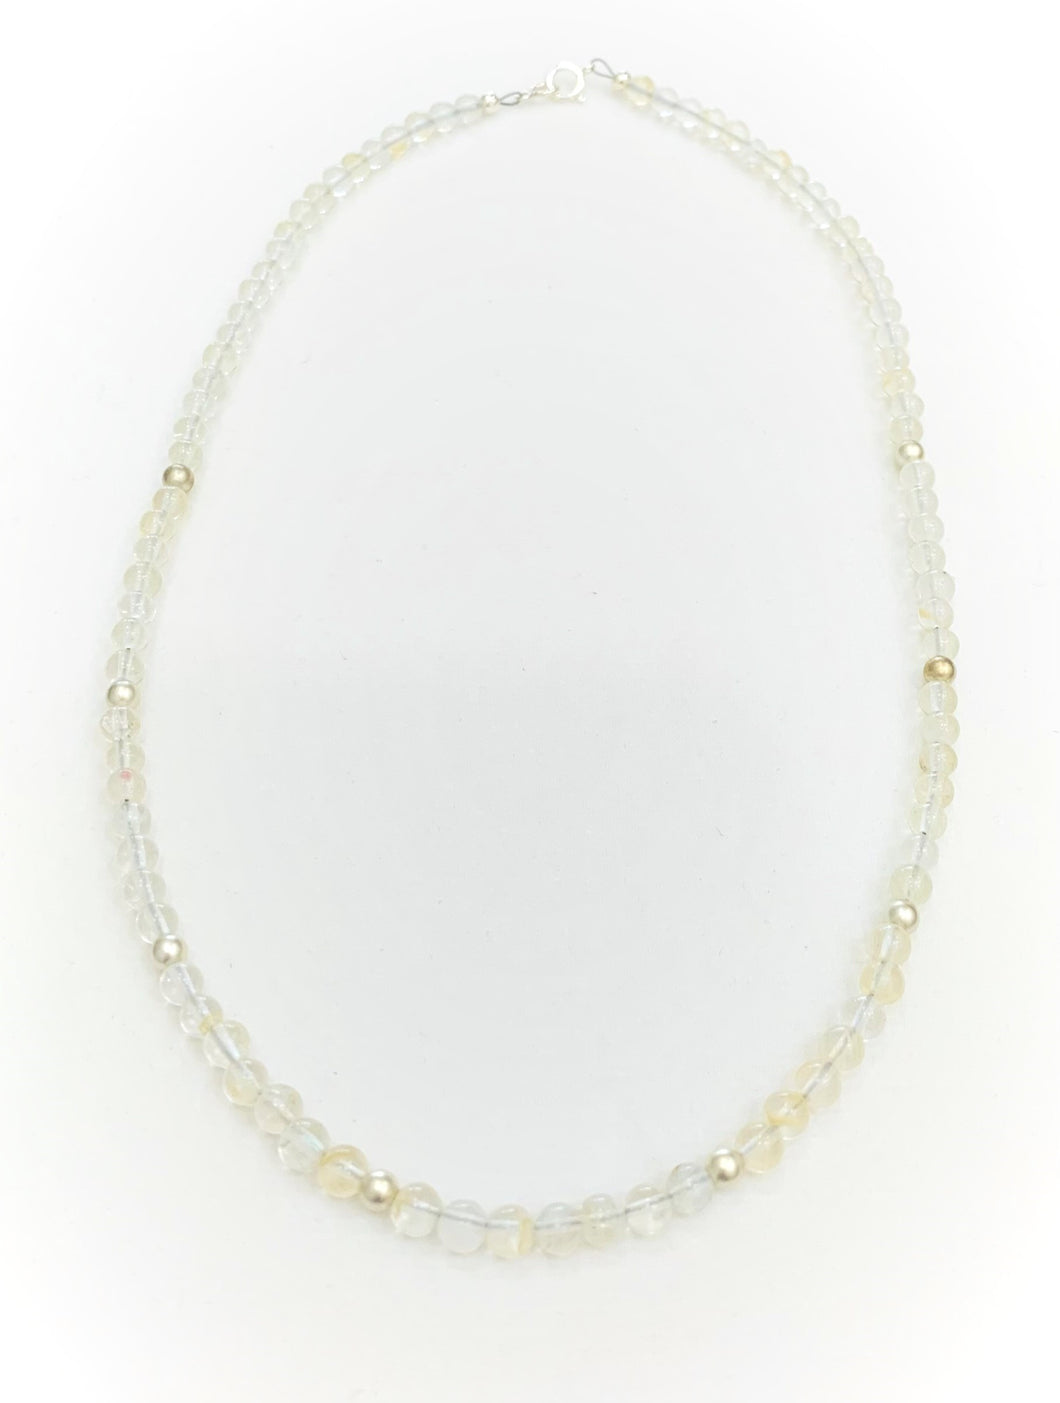 Handmade Clear Quartz Bead Necklace